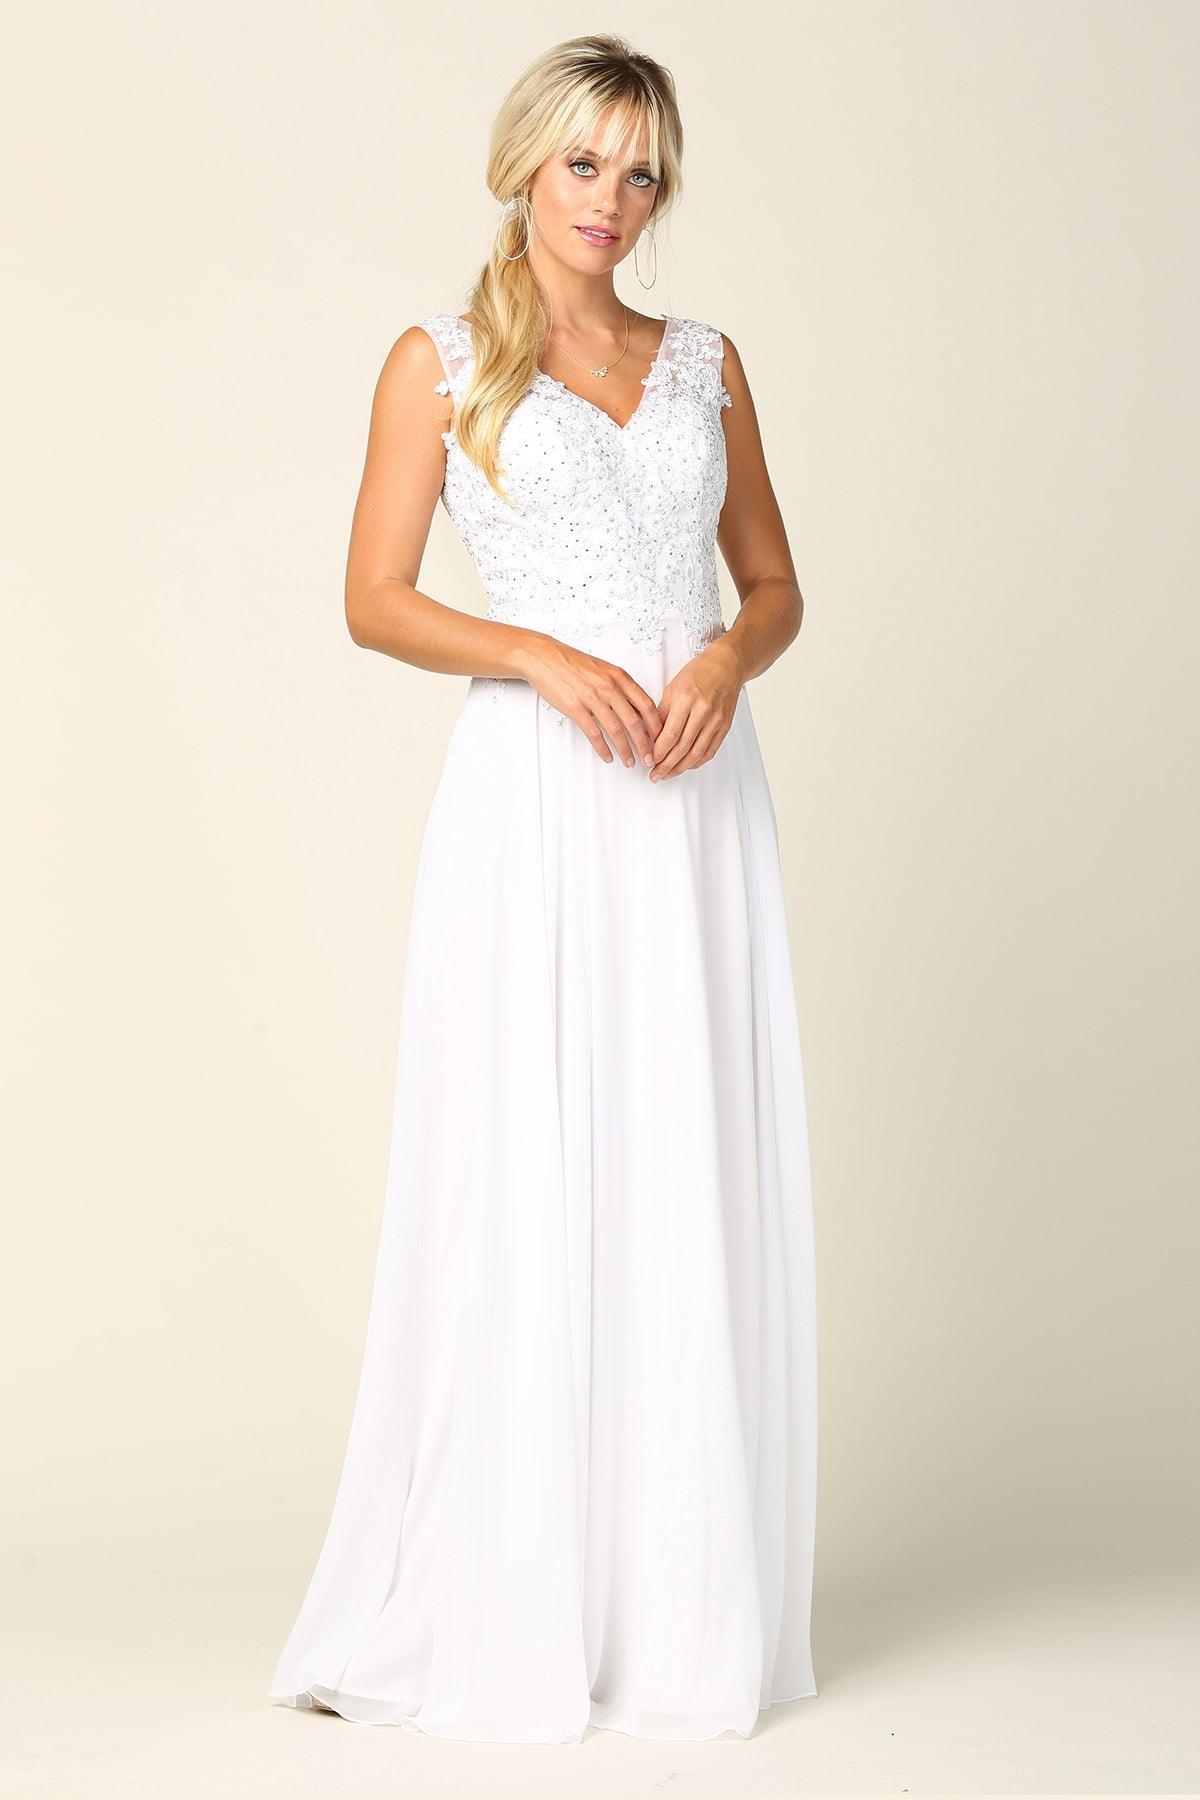 Bridal Gown Long Sleeveless Chiffon Wedding Dress - The Dress Outlet